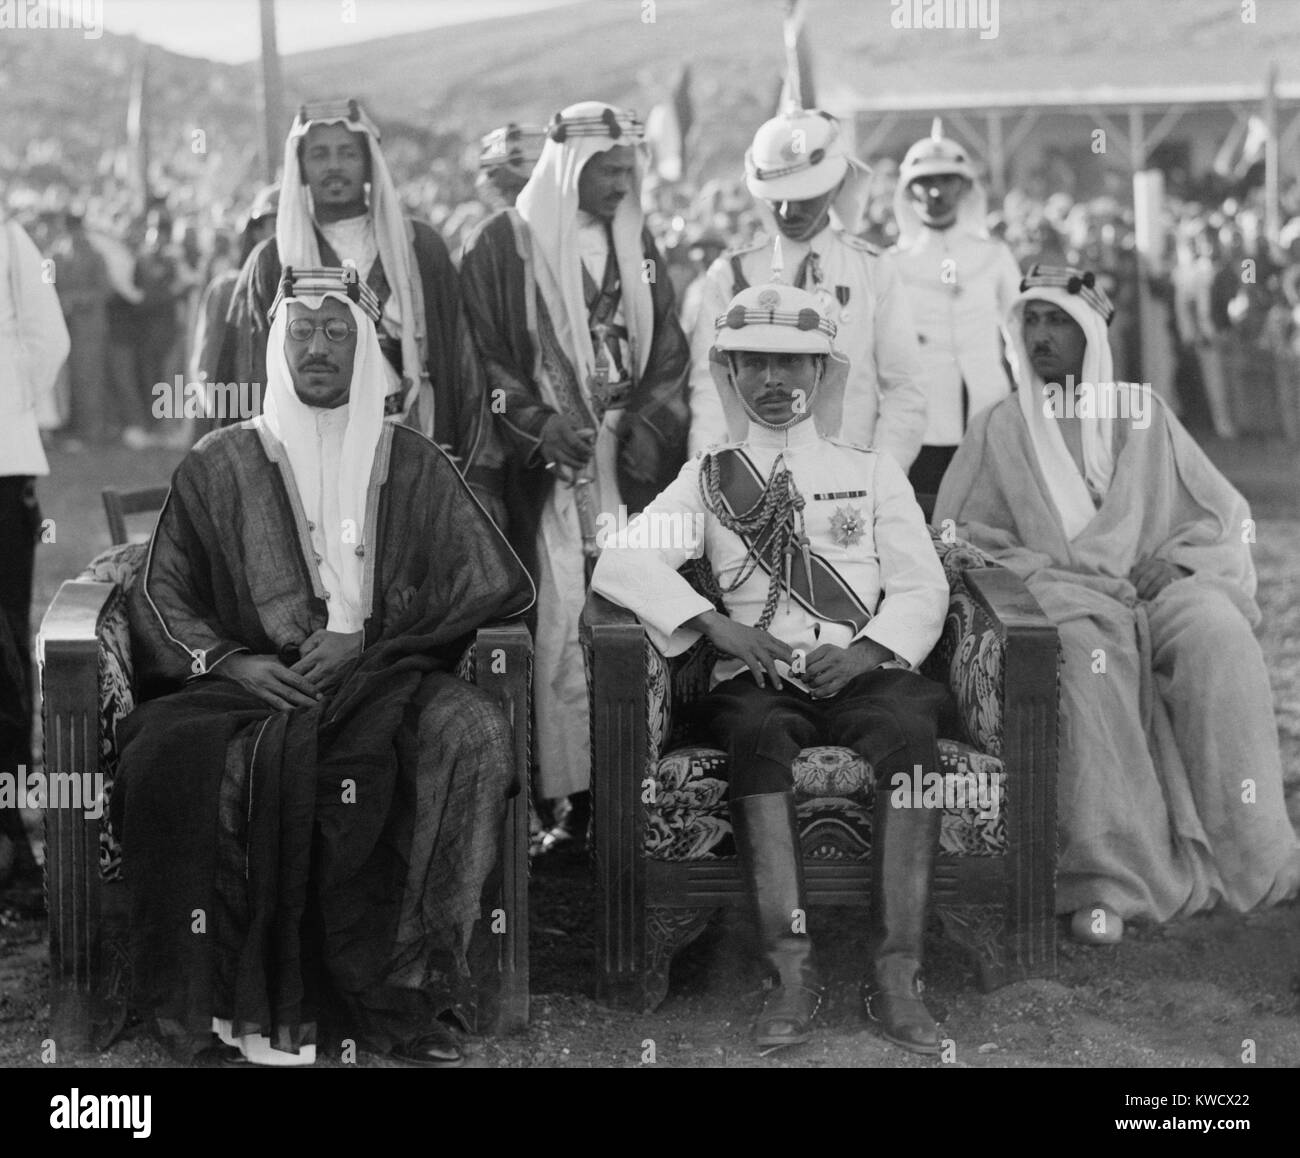 King Saud and Talal bin Abdullah (Emir Abdullahs son and future King Talal I) in Ammon, Jordan. In 1932, Saud consolidated his rule over much of the Arabian Peninsula, founding the Kingdom of Saudi Arabia (BSLOC 2017 1 98) Stock Photo